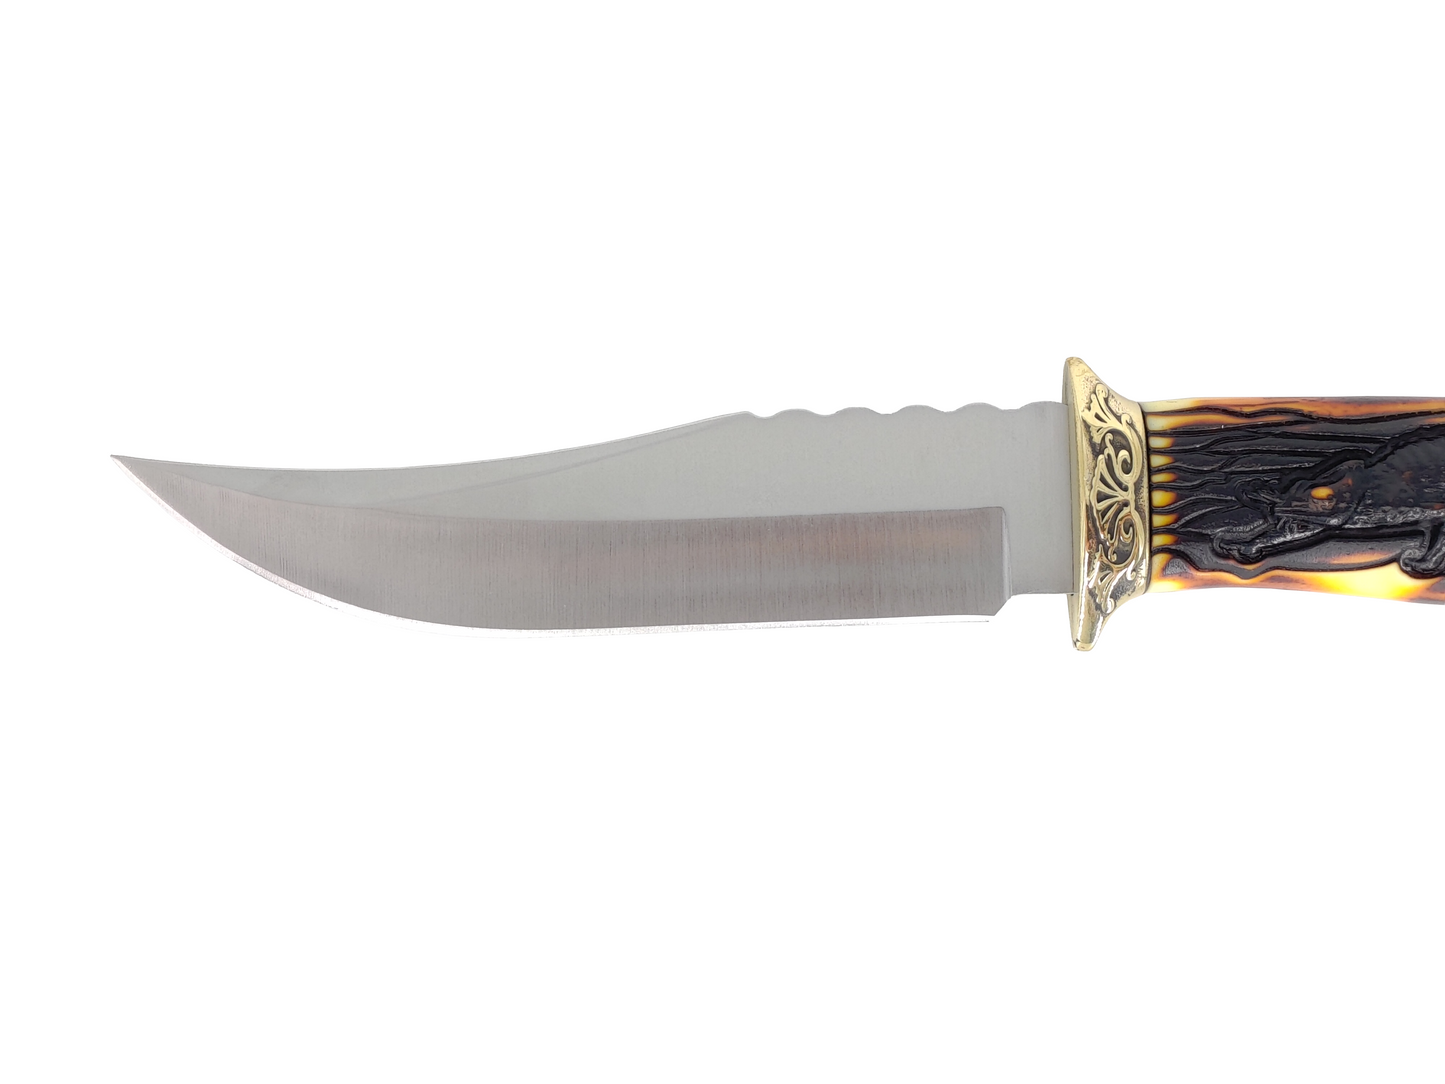 CROCODILE ENGRAVED FIXED BLADE HUNTING KNIFE WITH NYLON SHEATH